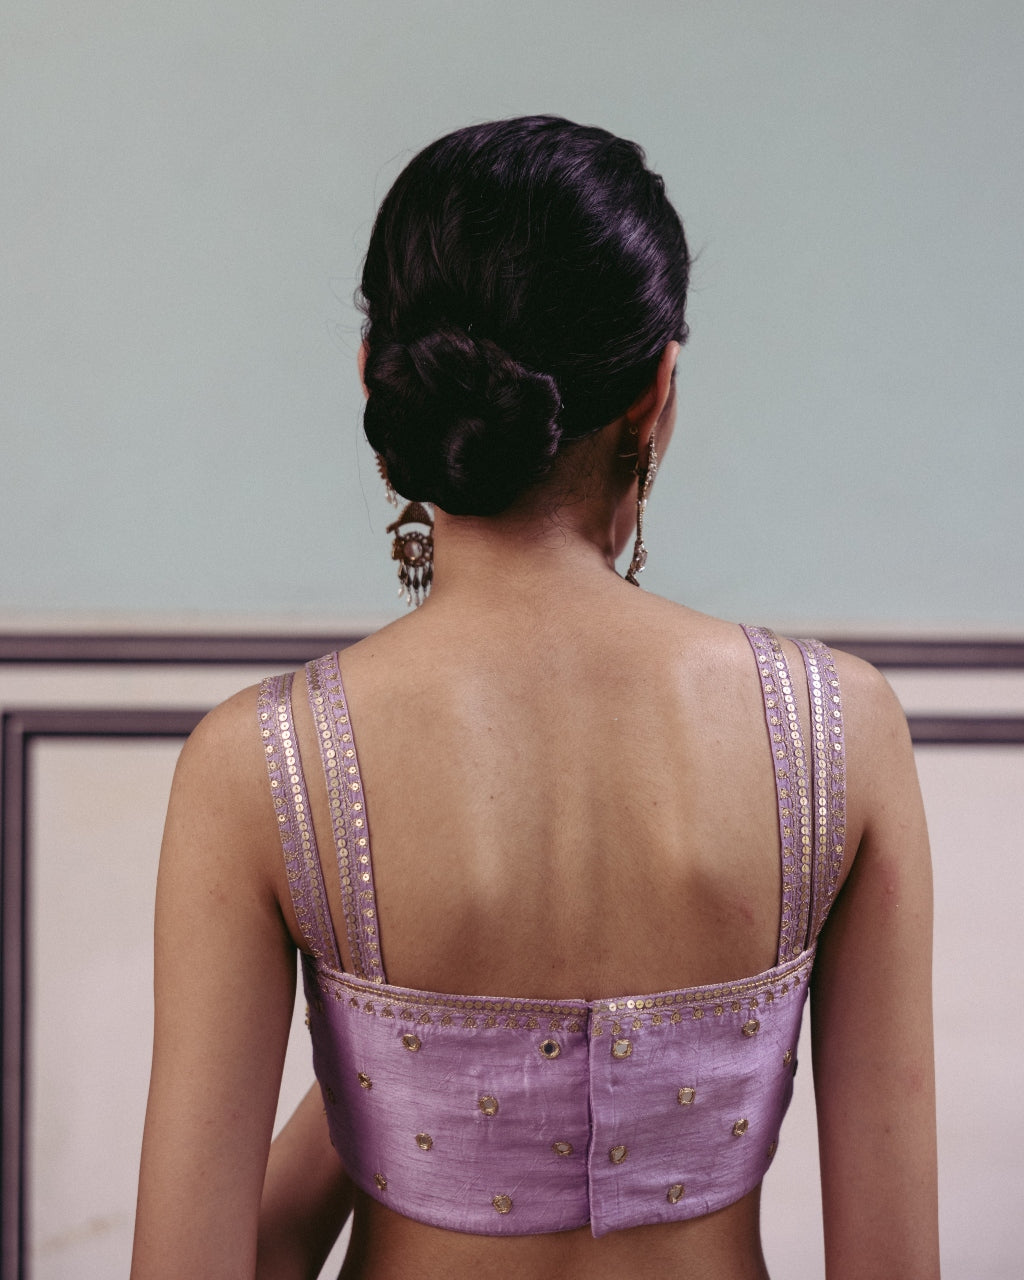 Lilac Pre-Draped Sari Set